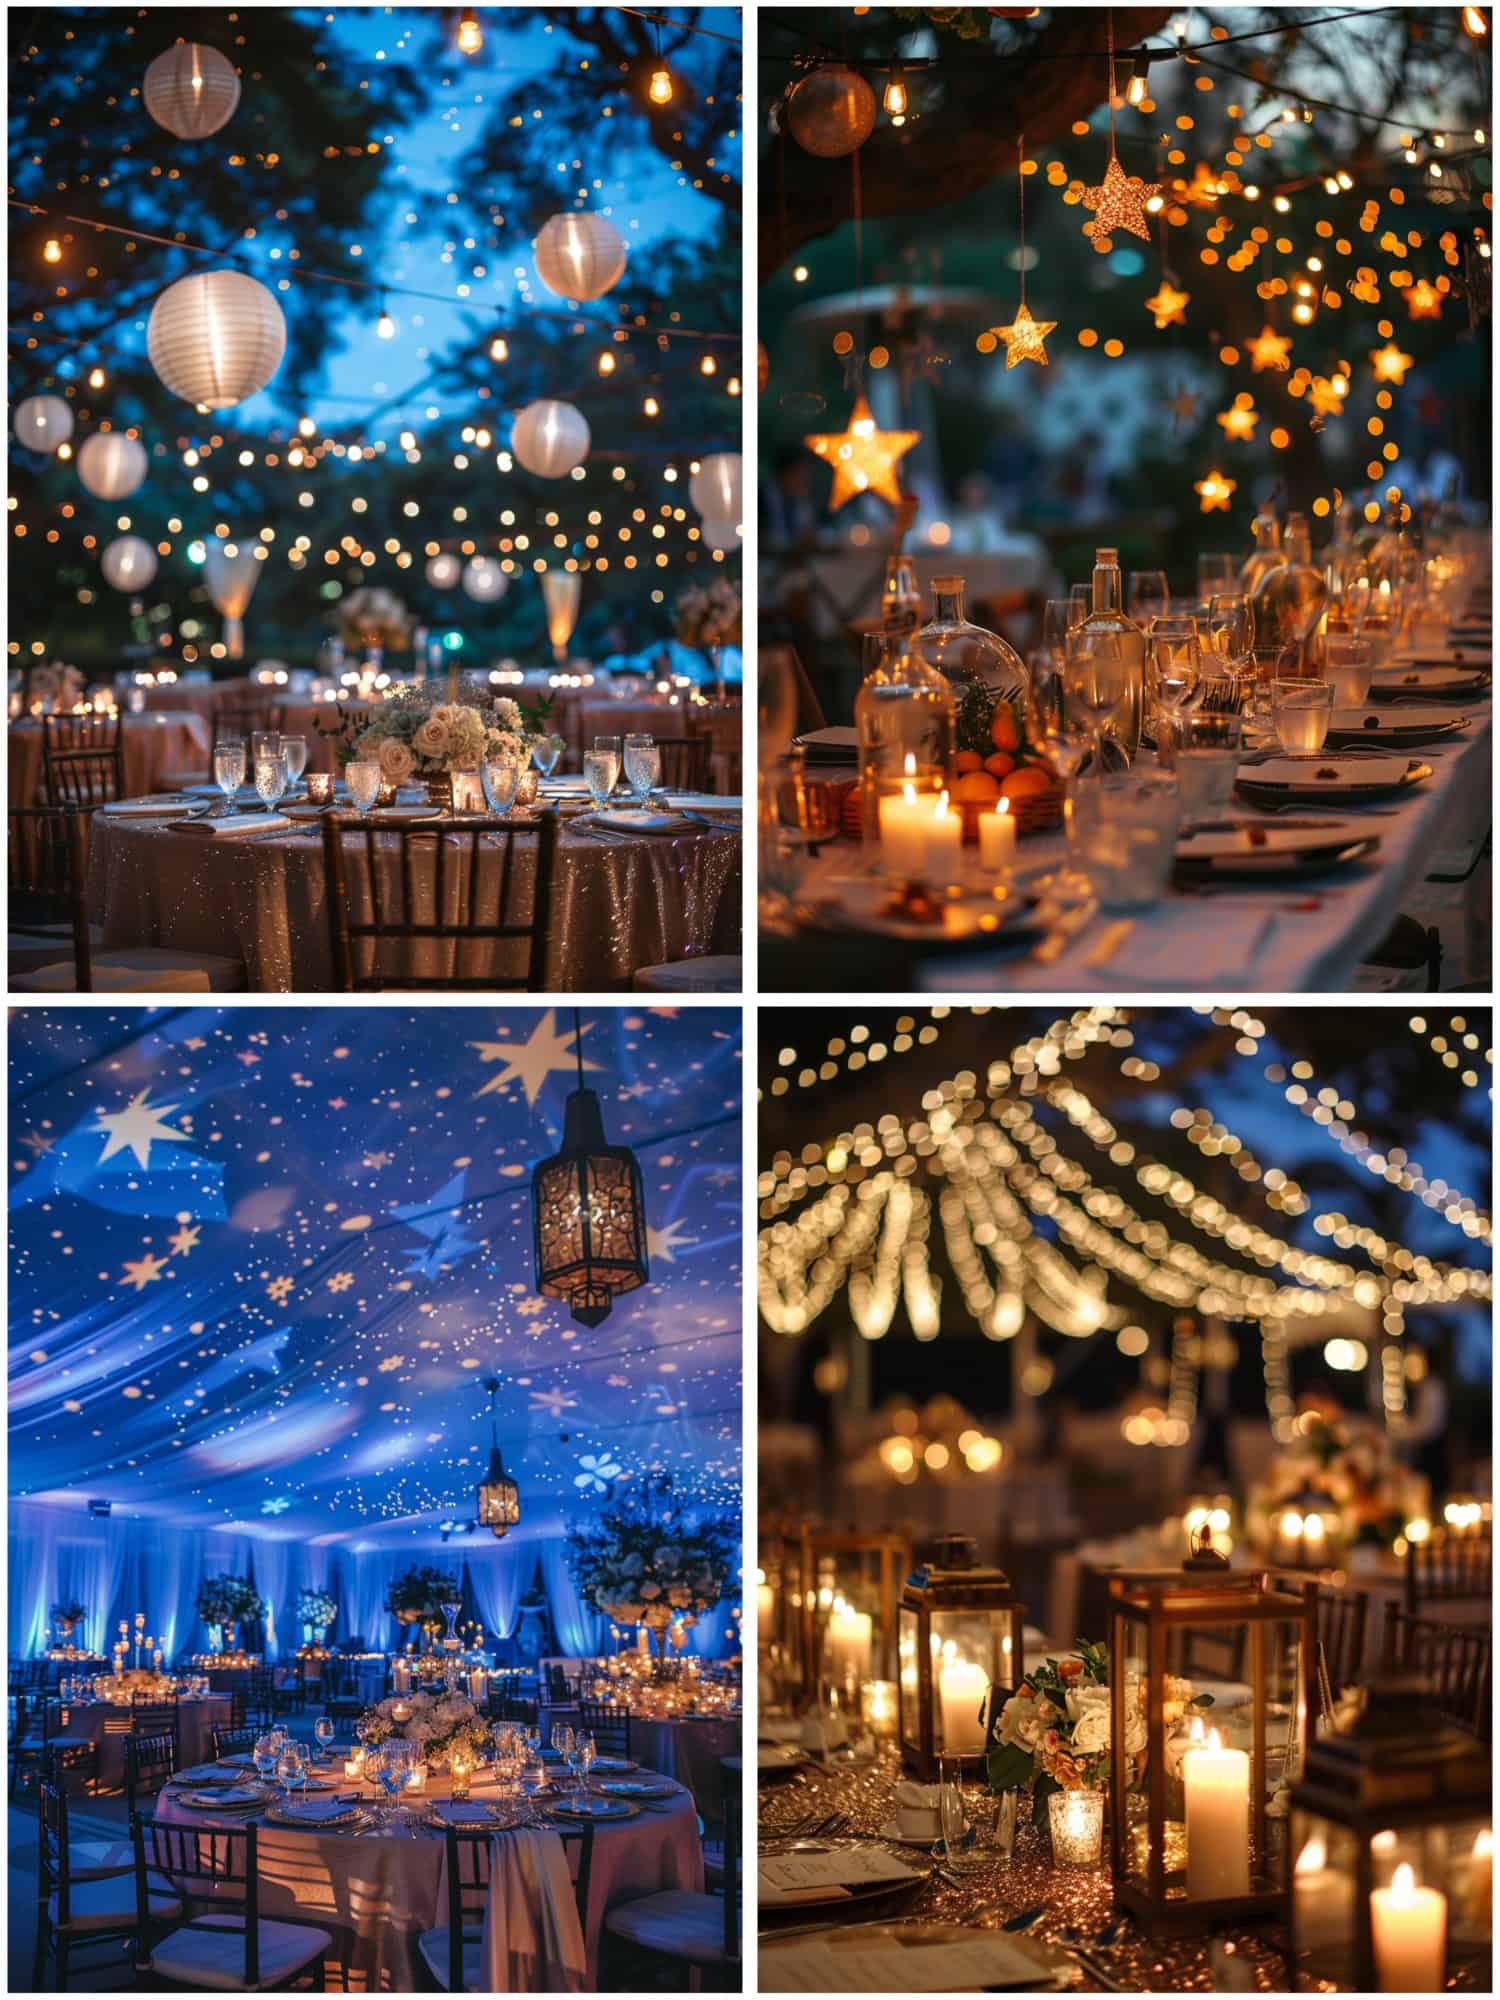 tangled-themed nighttime wedding reception